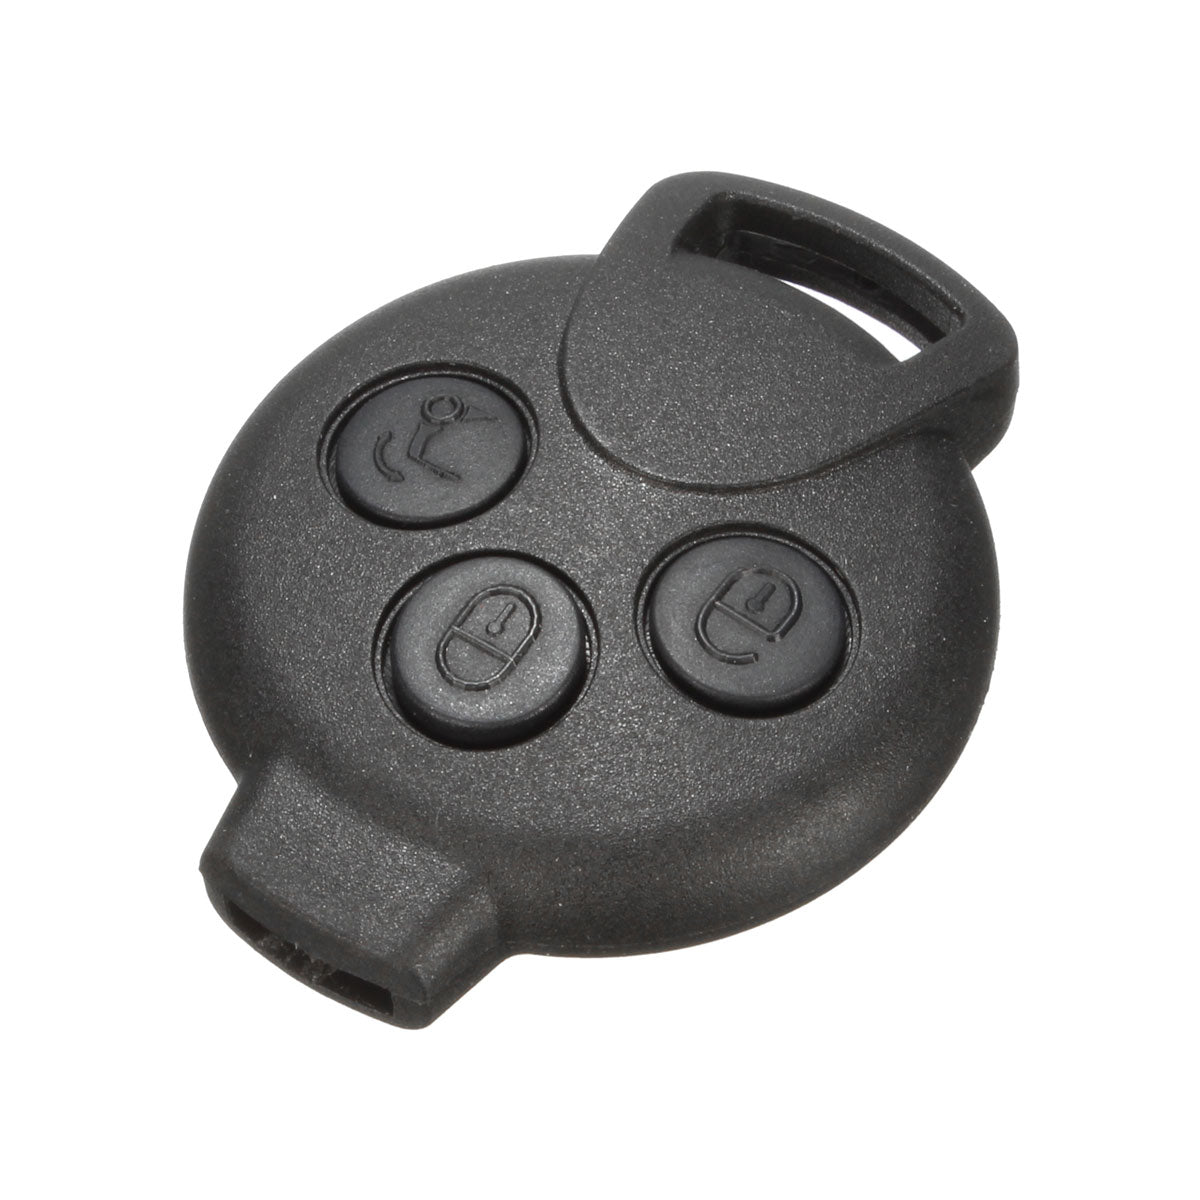 Dim Gray 3 Button Car Remote Control Key FOB Shell Case For 451 Fortwo Cabrio Roadstar Coupe